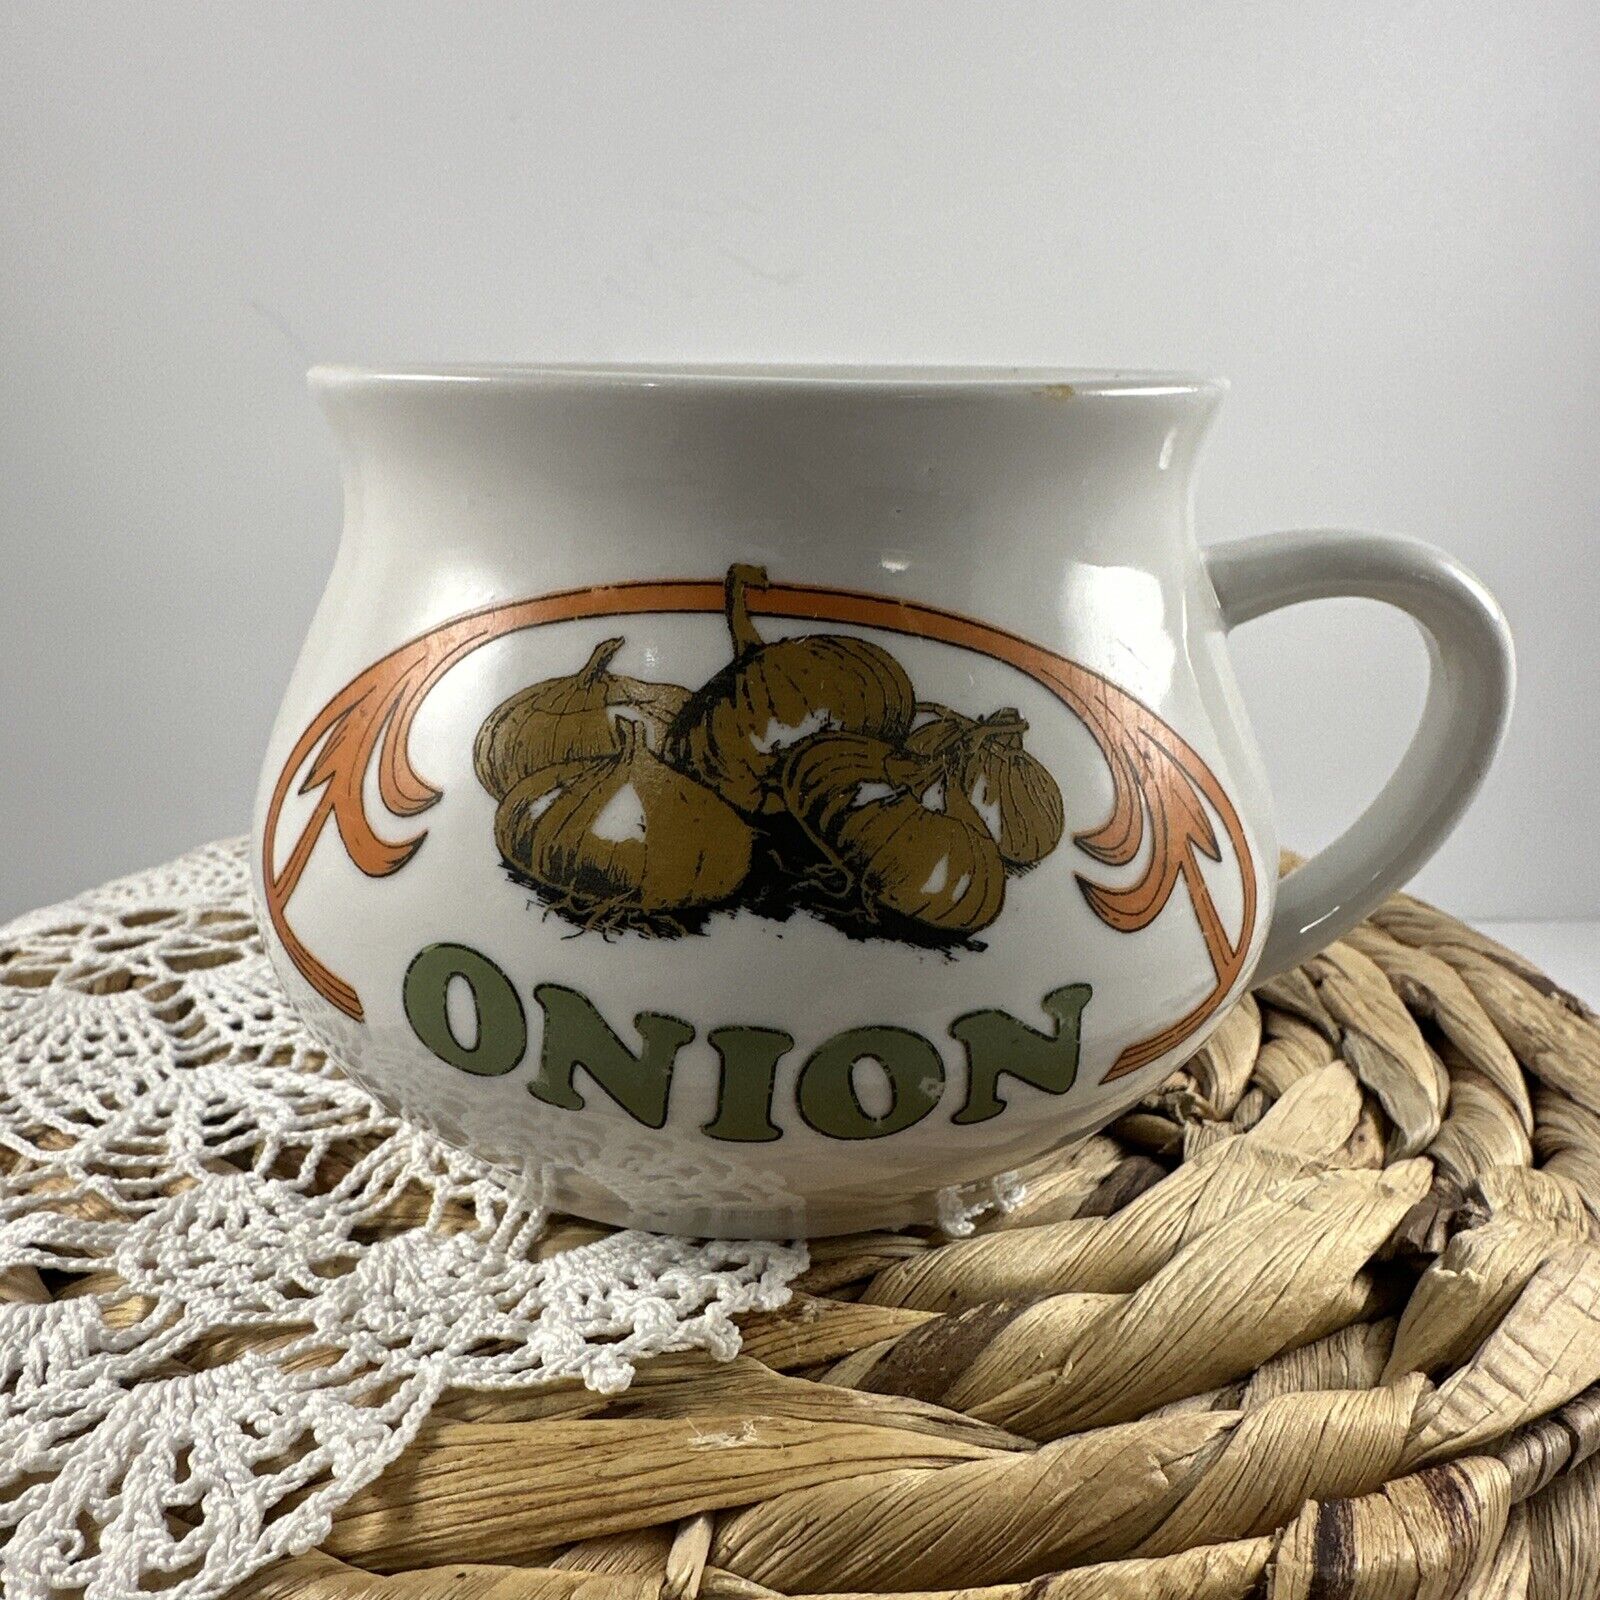 *VINTAGE/RETRO*  1970s Style Onion Soup Mug- RARE